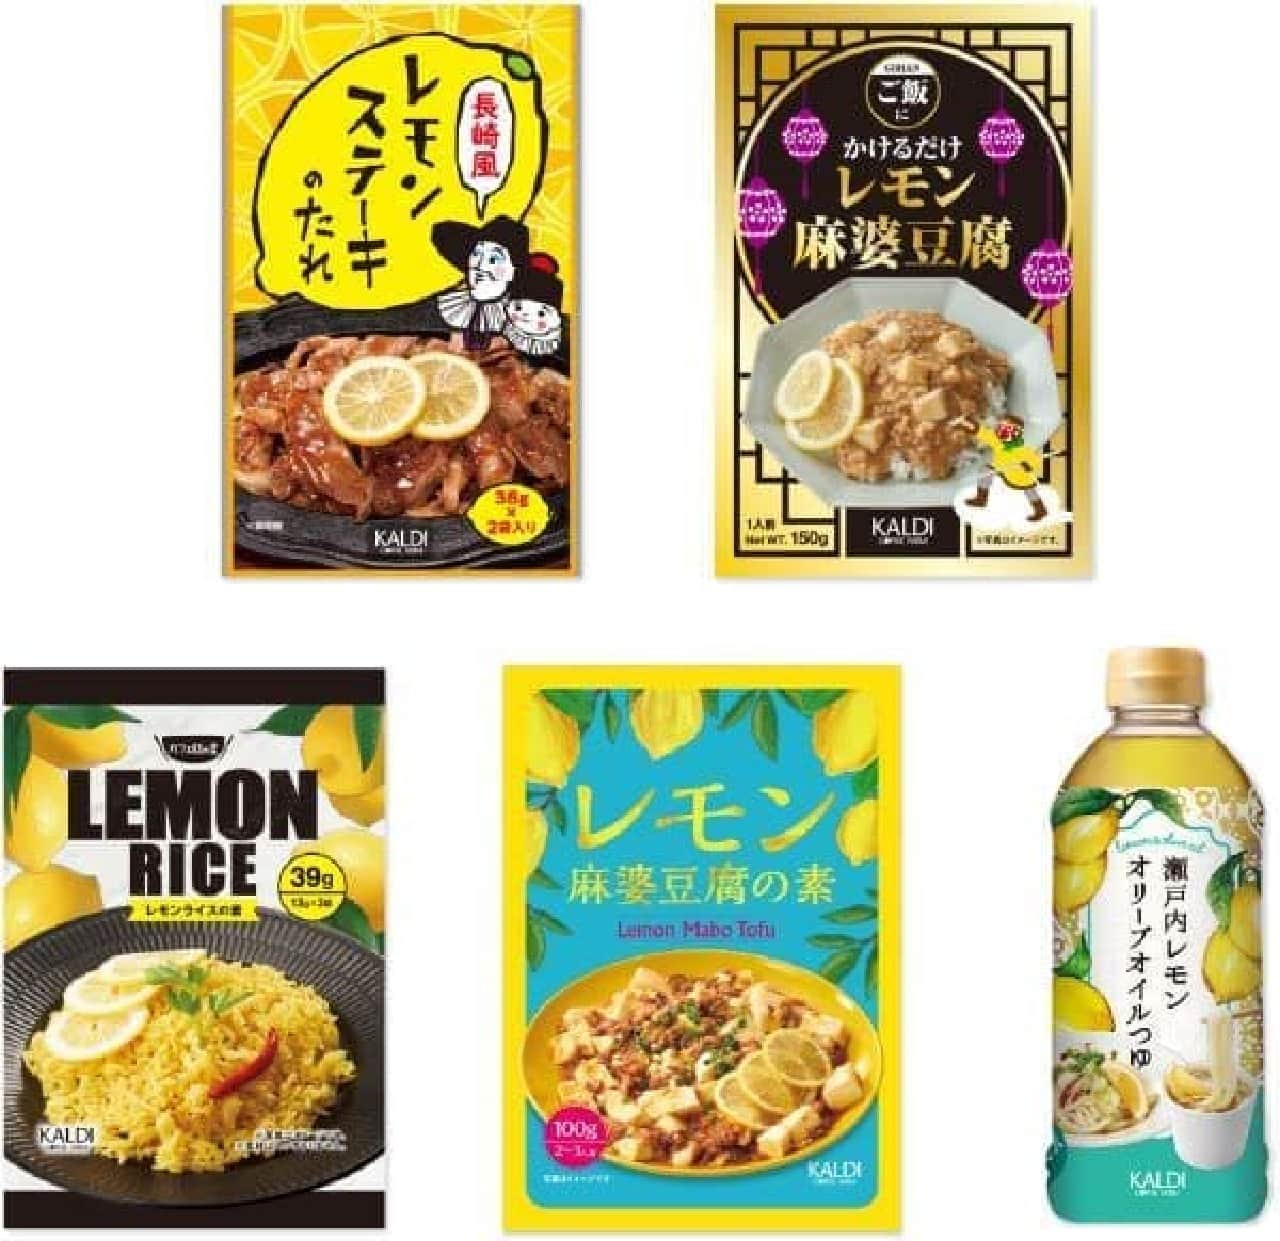 New lemon products for KALDI